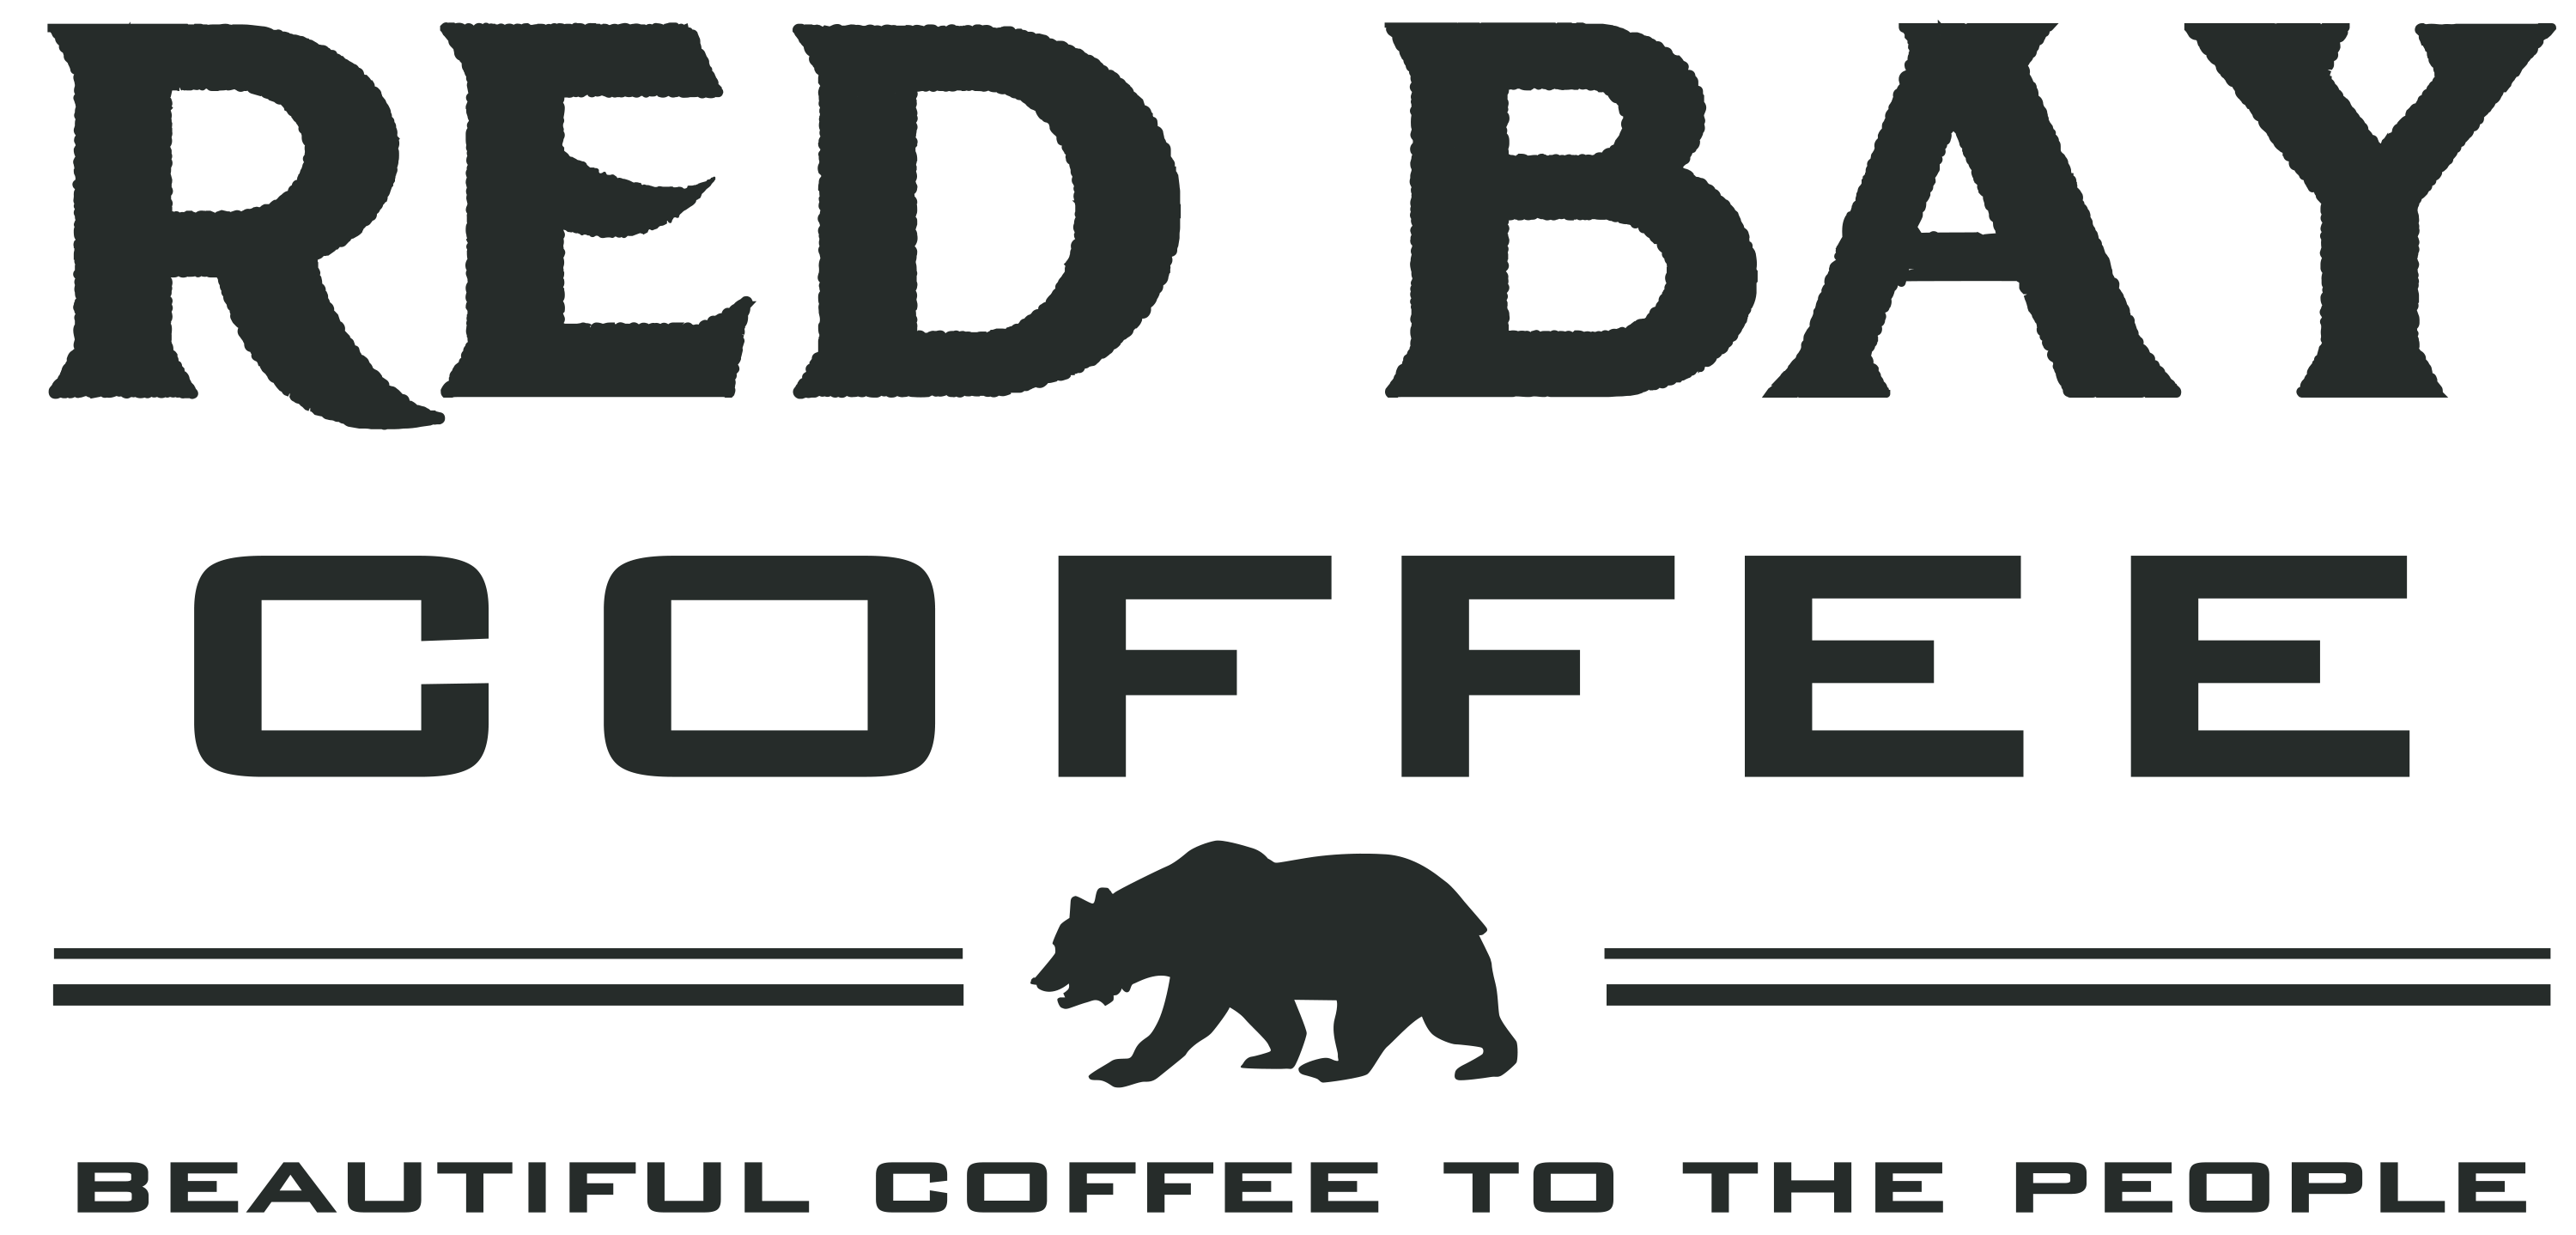 Red Bay Coffee